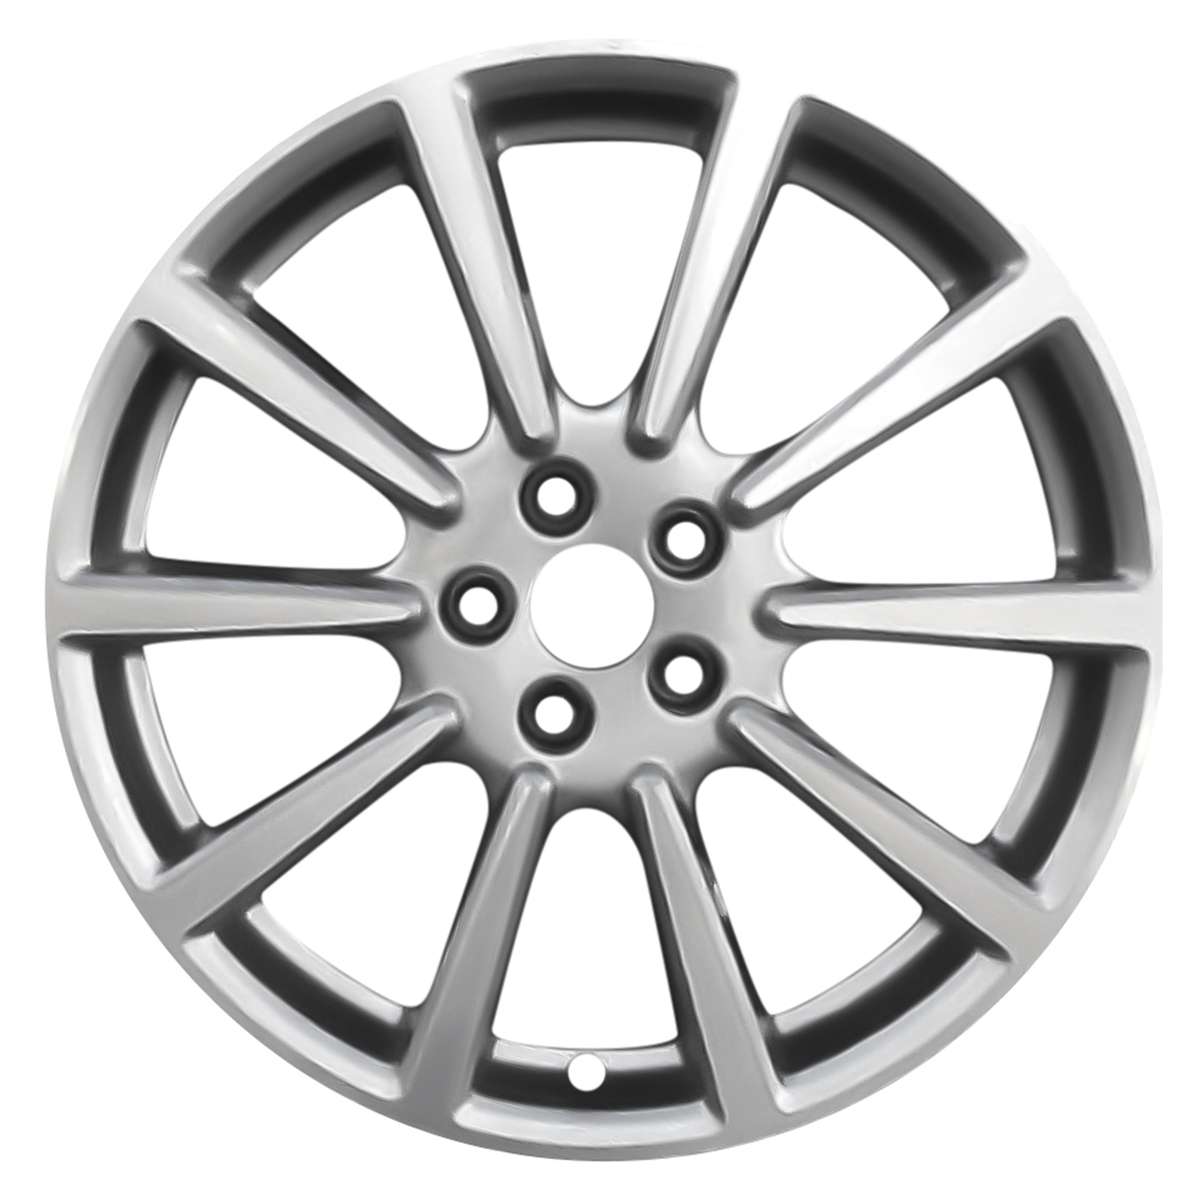 2019 Lincoln MKC 19" OEM Wheel Rim W10211MS